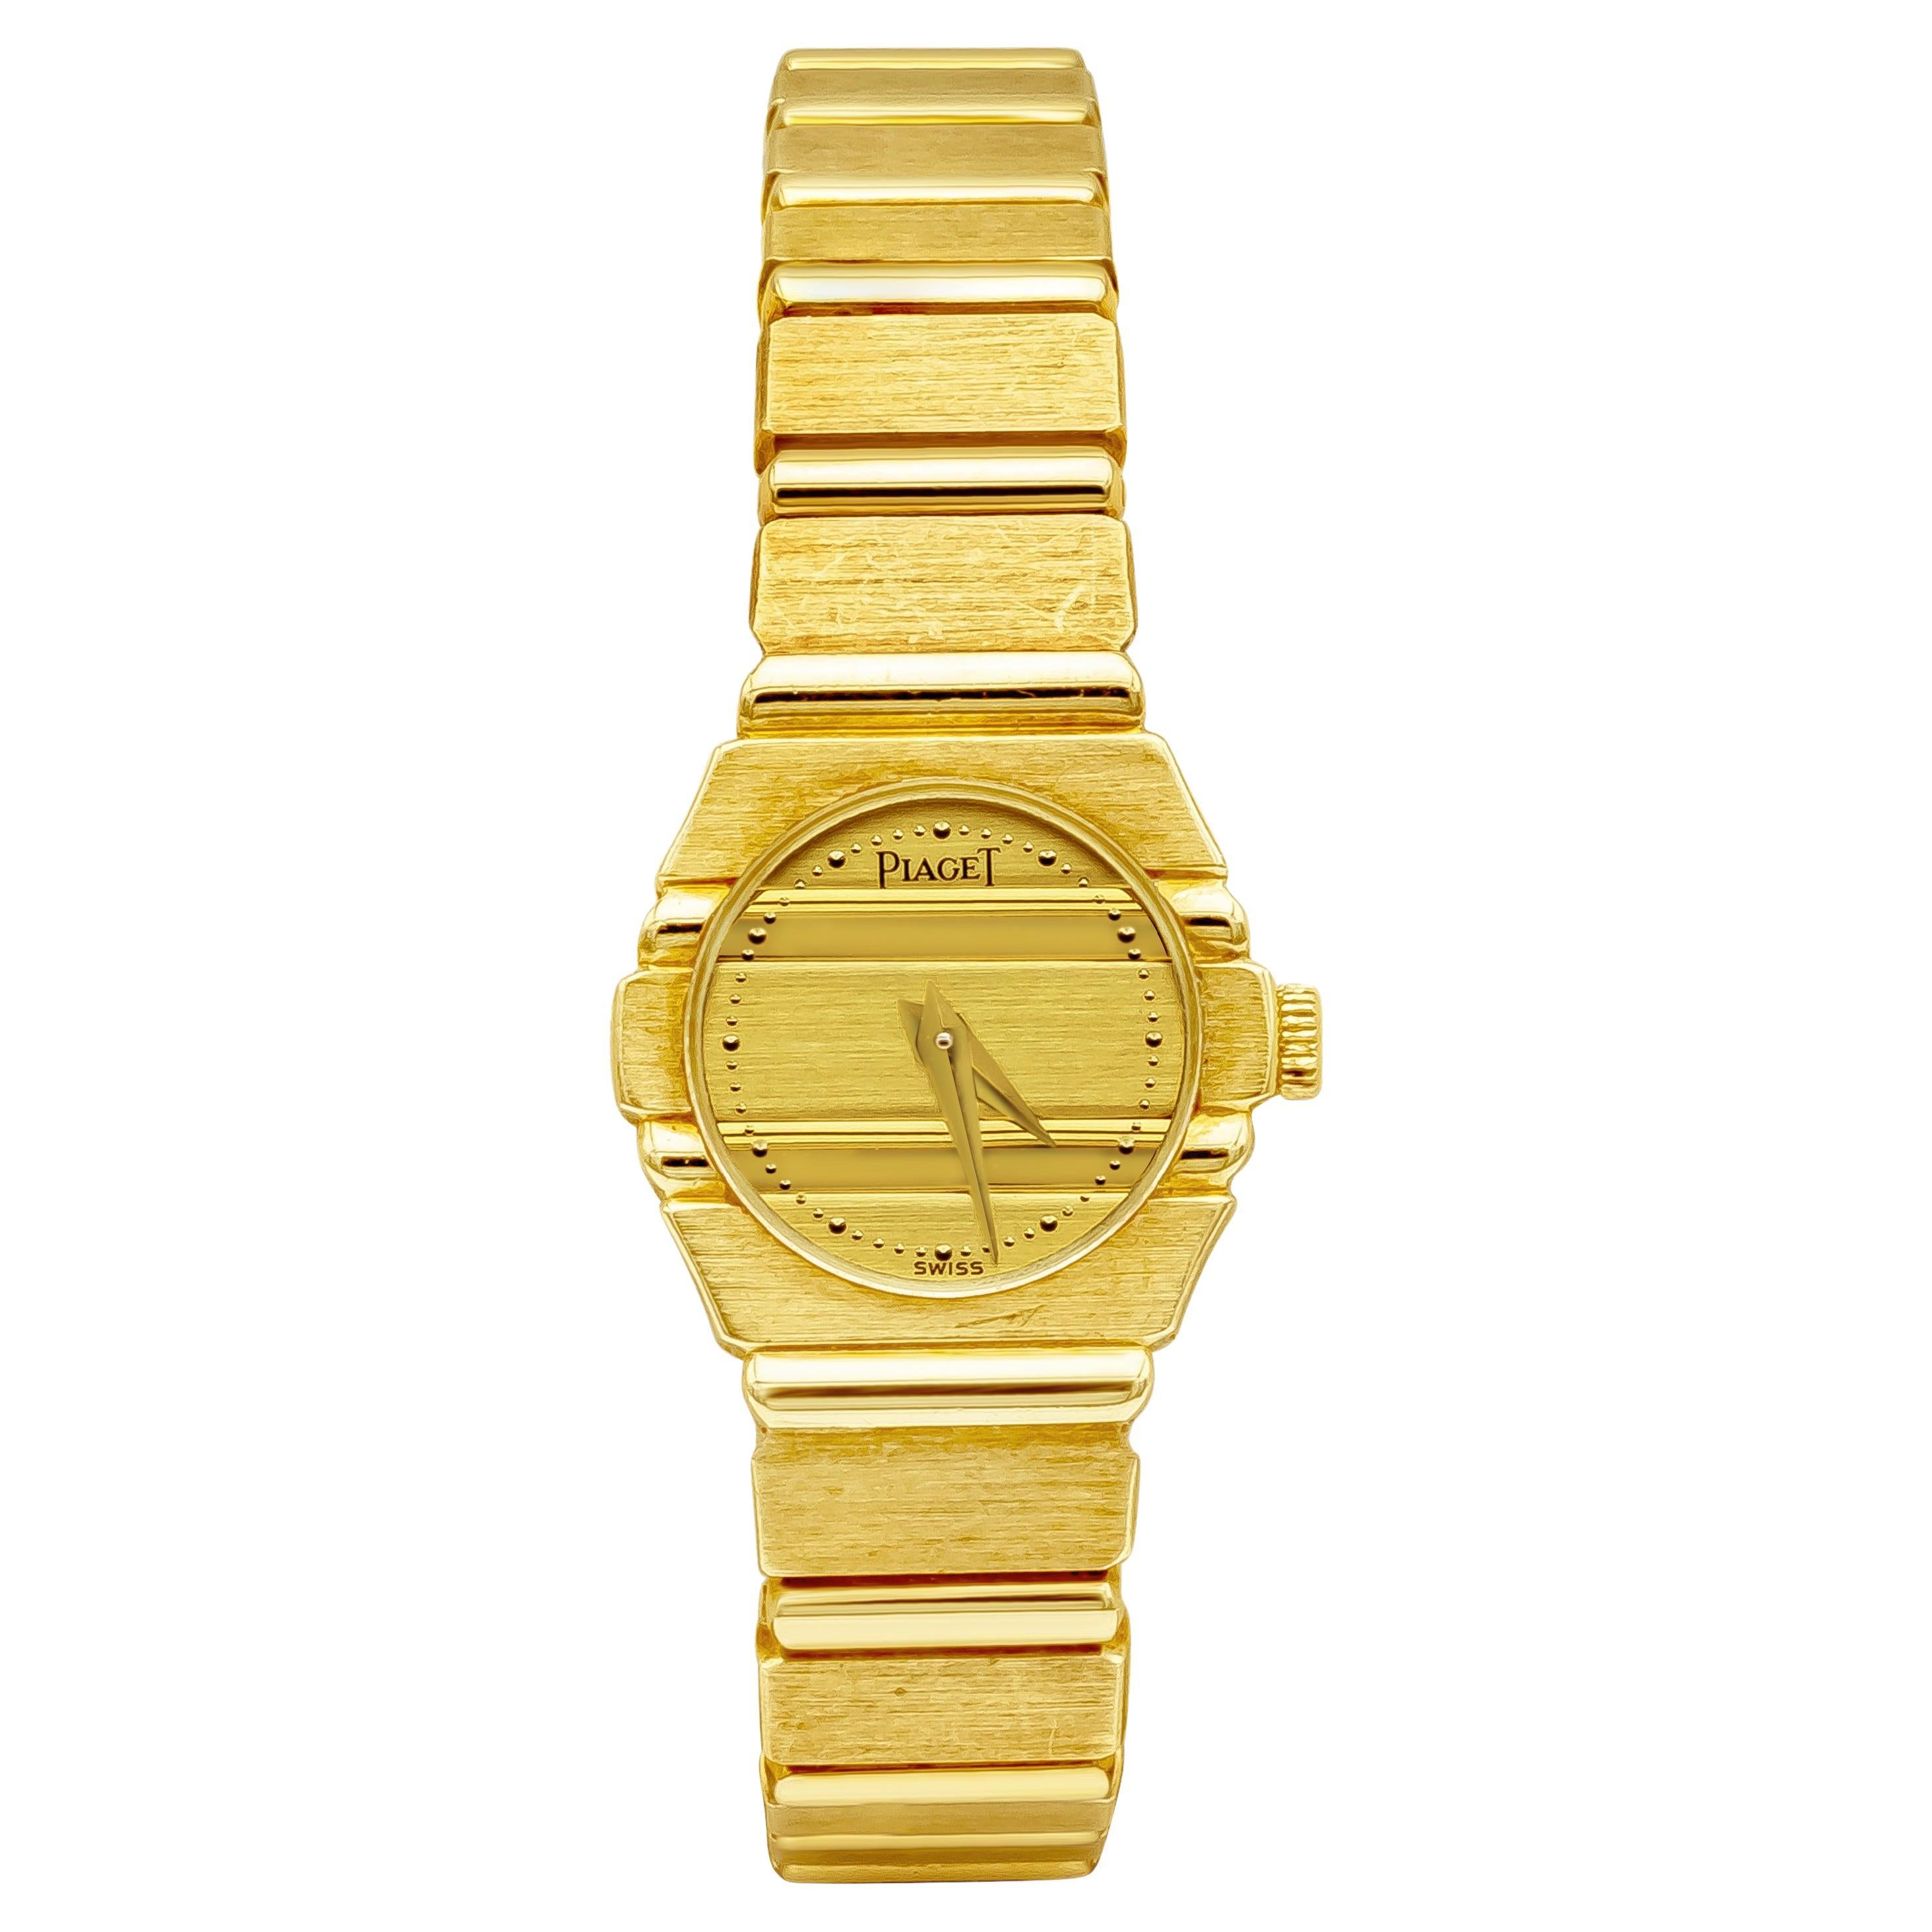 Piaget Polo 841 C701 18K Yellow Gold Ladies Watch